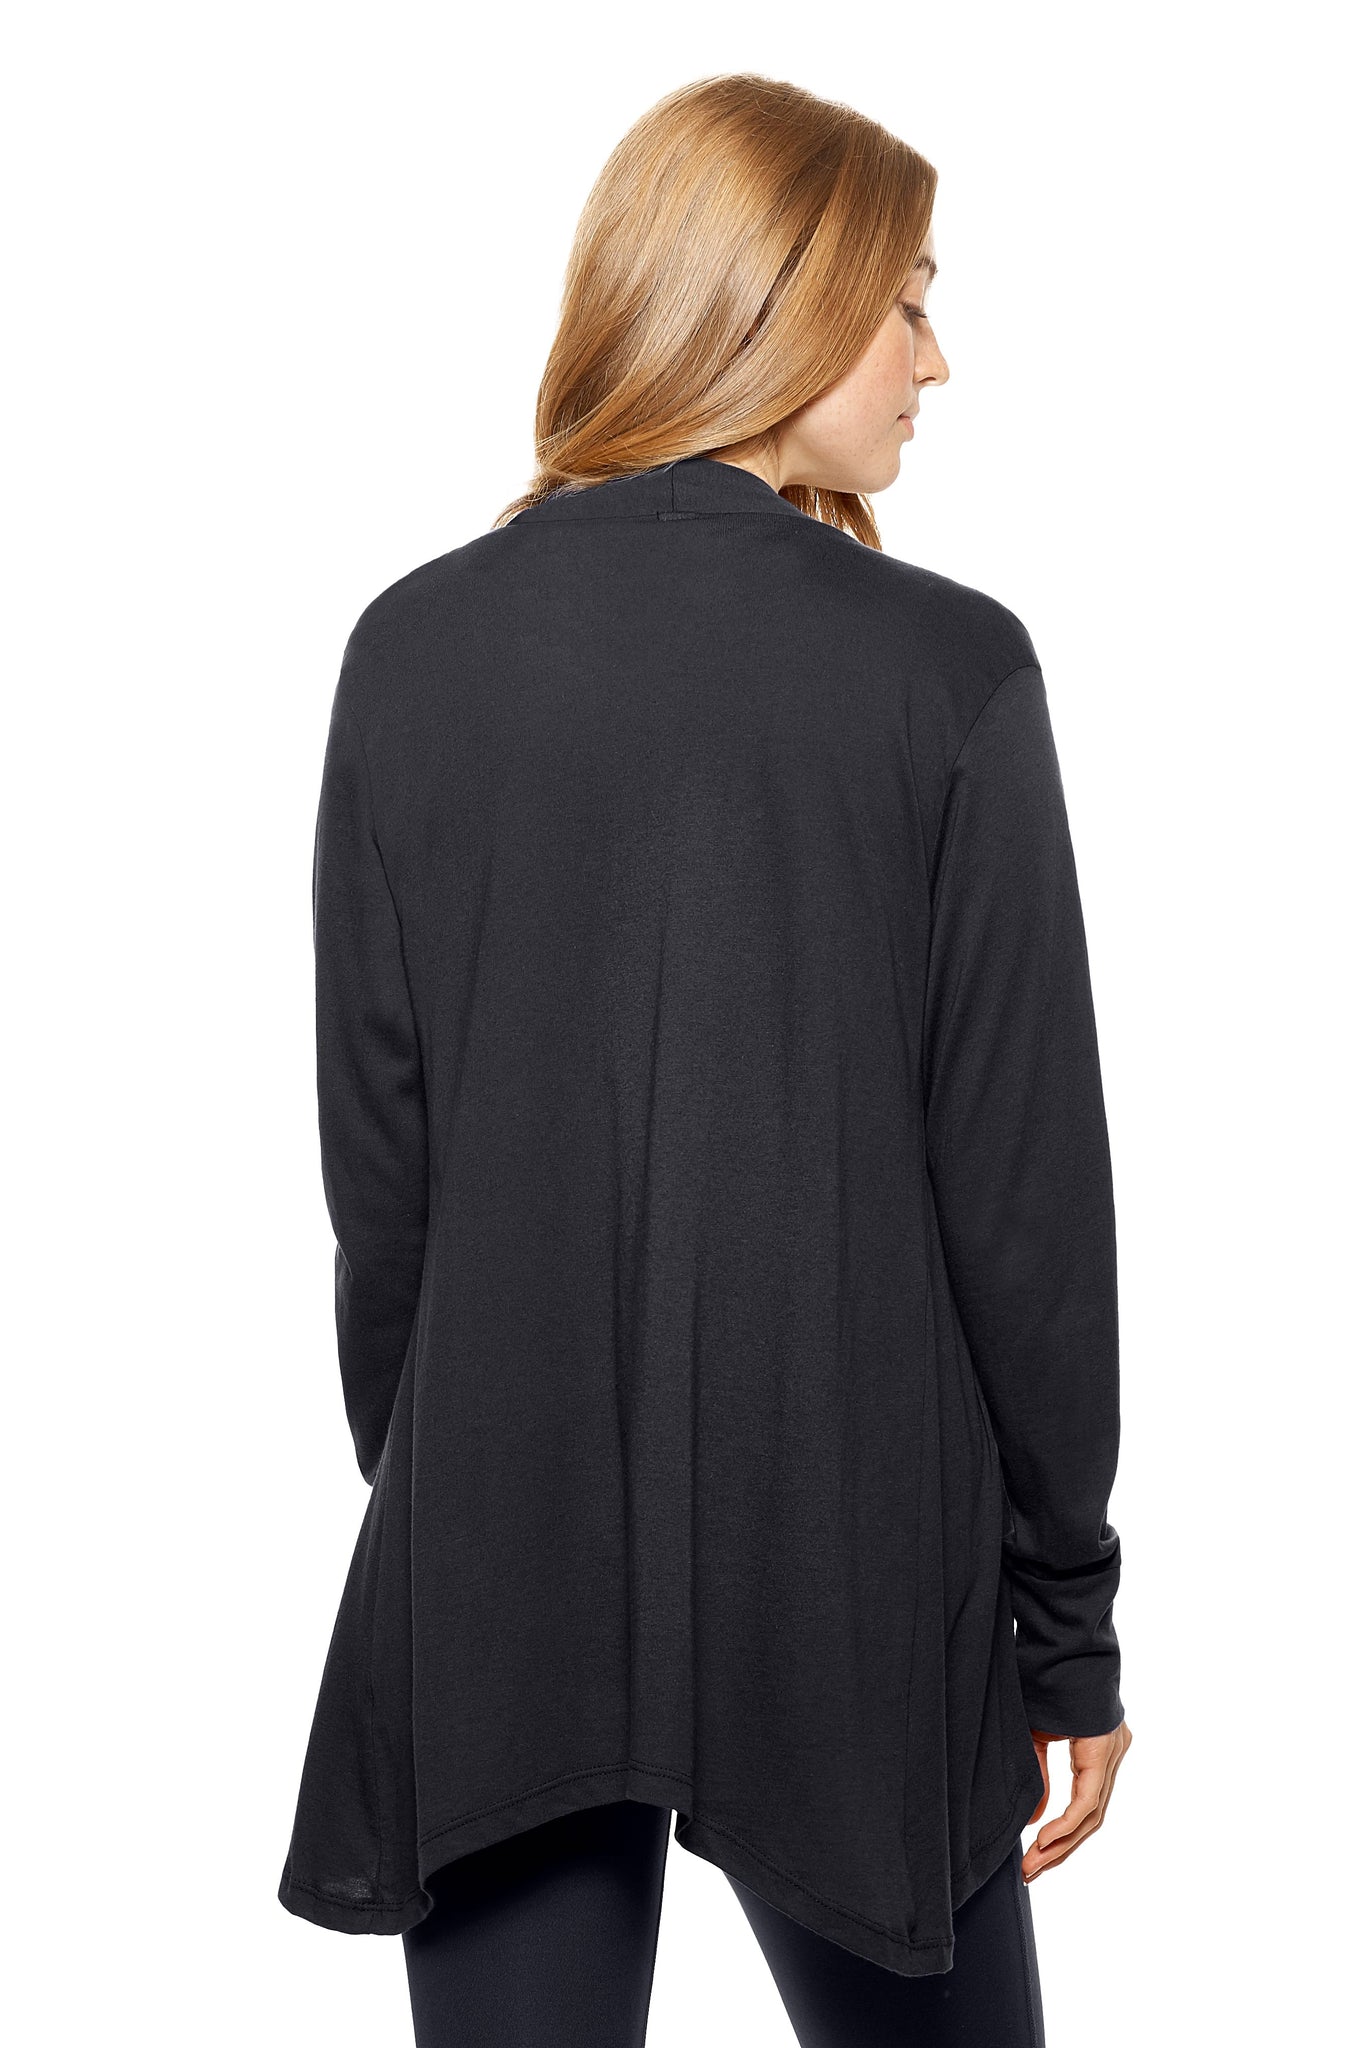 Expert Brand Wholesale Women's MoCA™ Drape Front Cardigan in Black Image 3#black